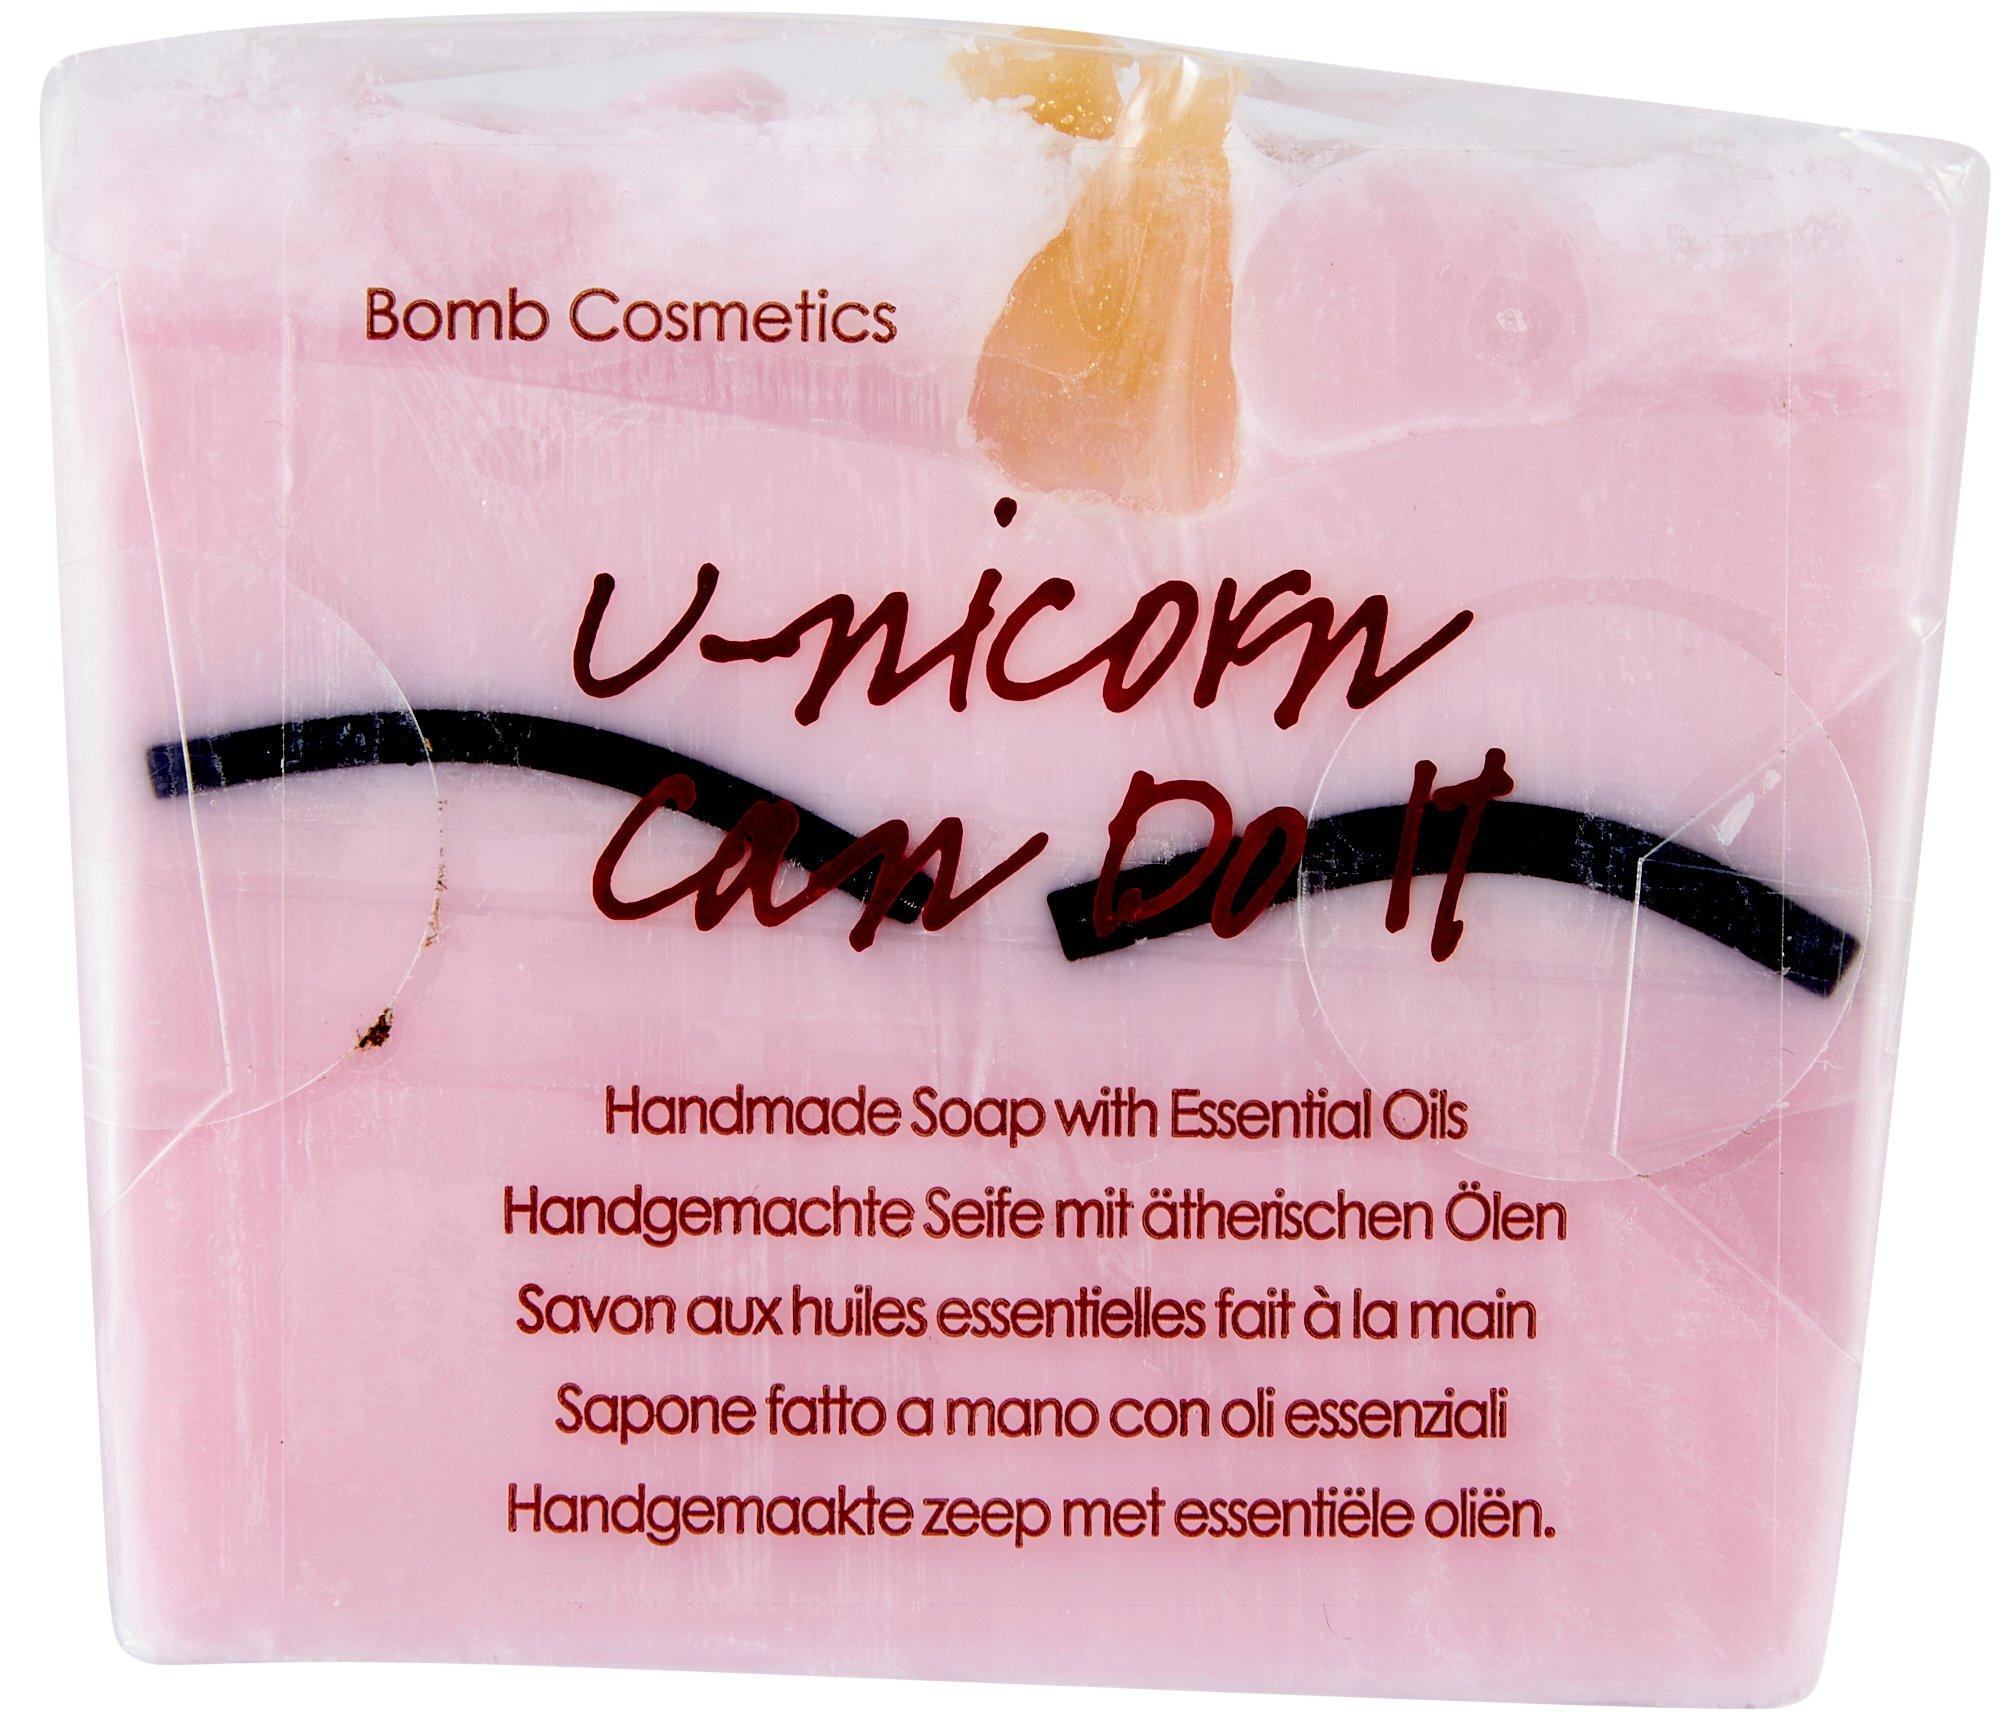 Bomb Cosmetics U-nicorn Can Do It Handmade Soap 3.5 oz.